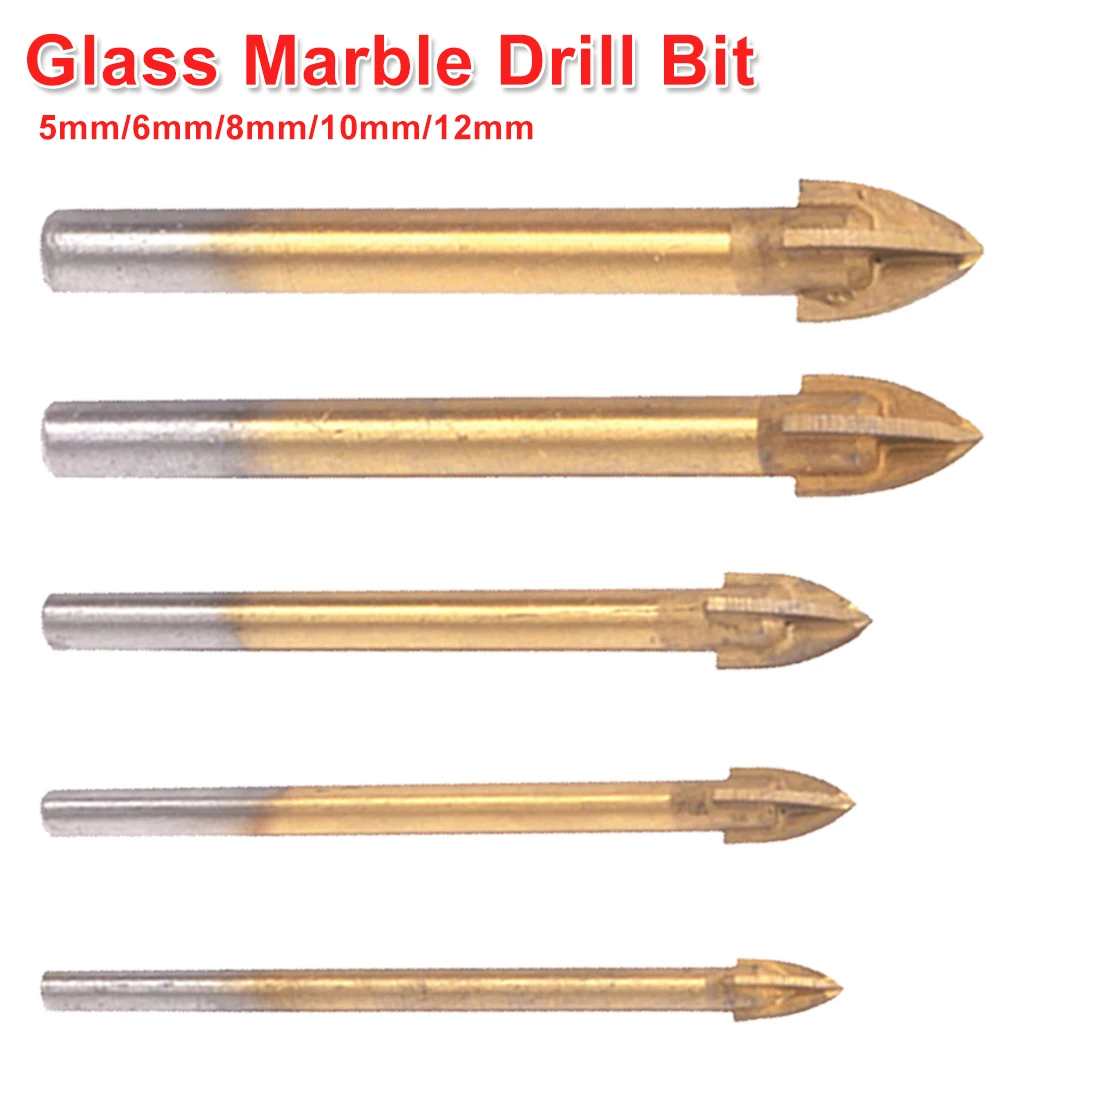 16mm Glass Tile Drill Bit Titanium Plated Spear Head Round Shank For Ceramic Cut